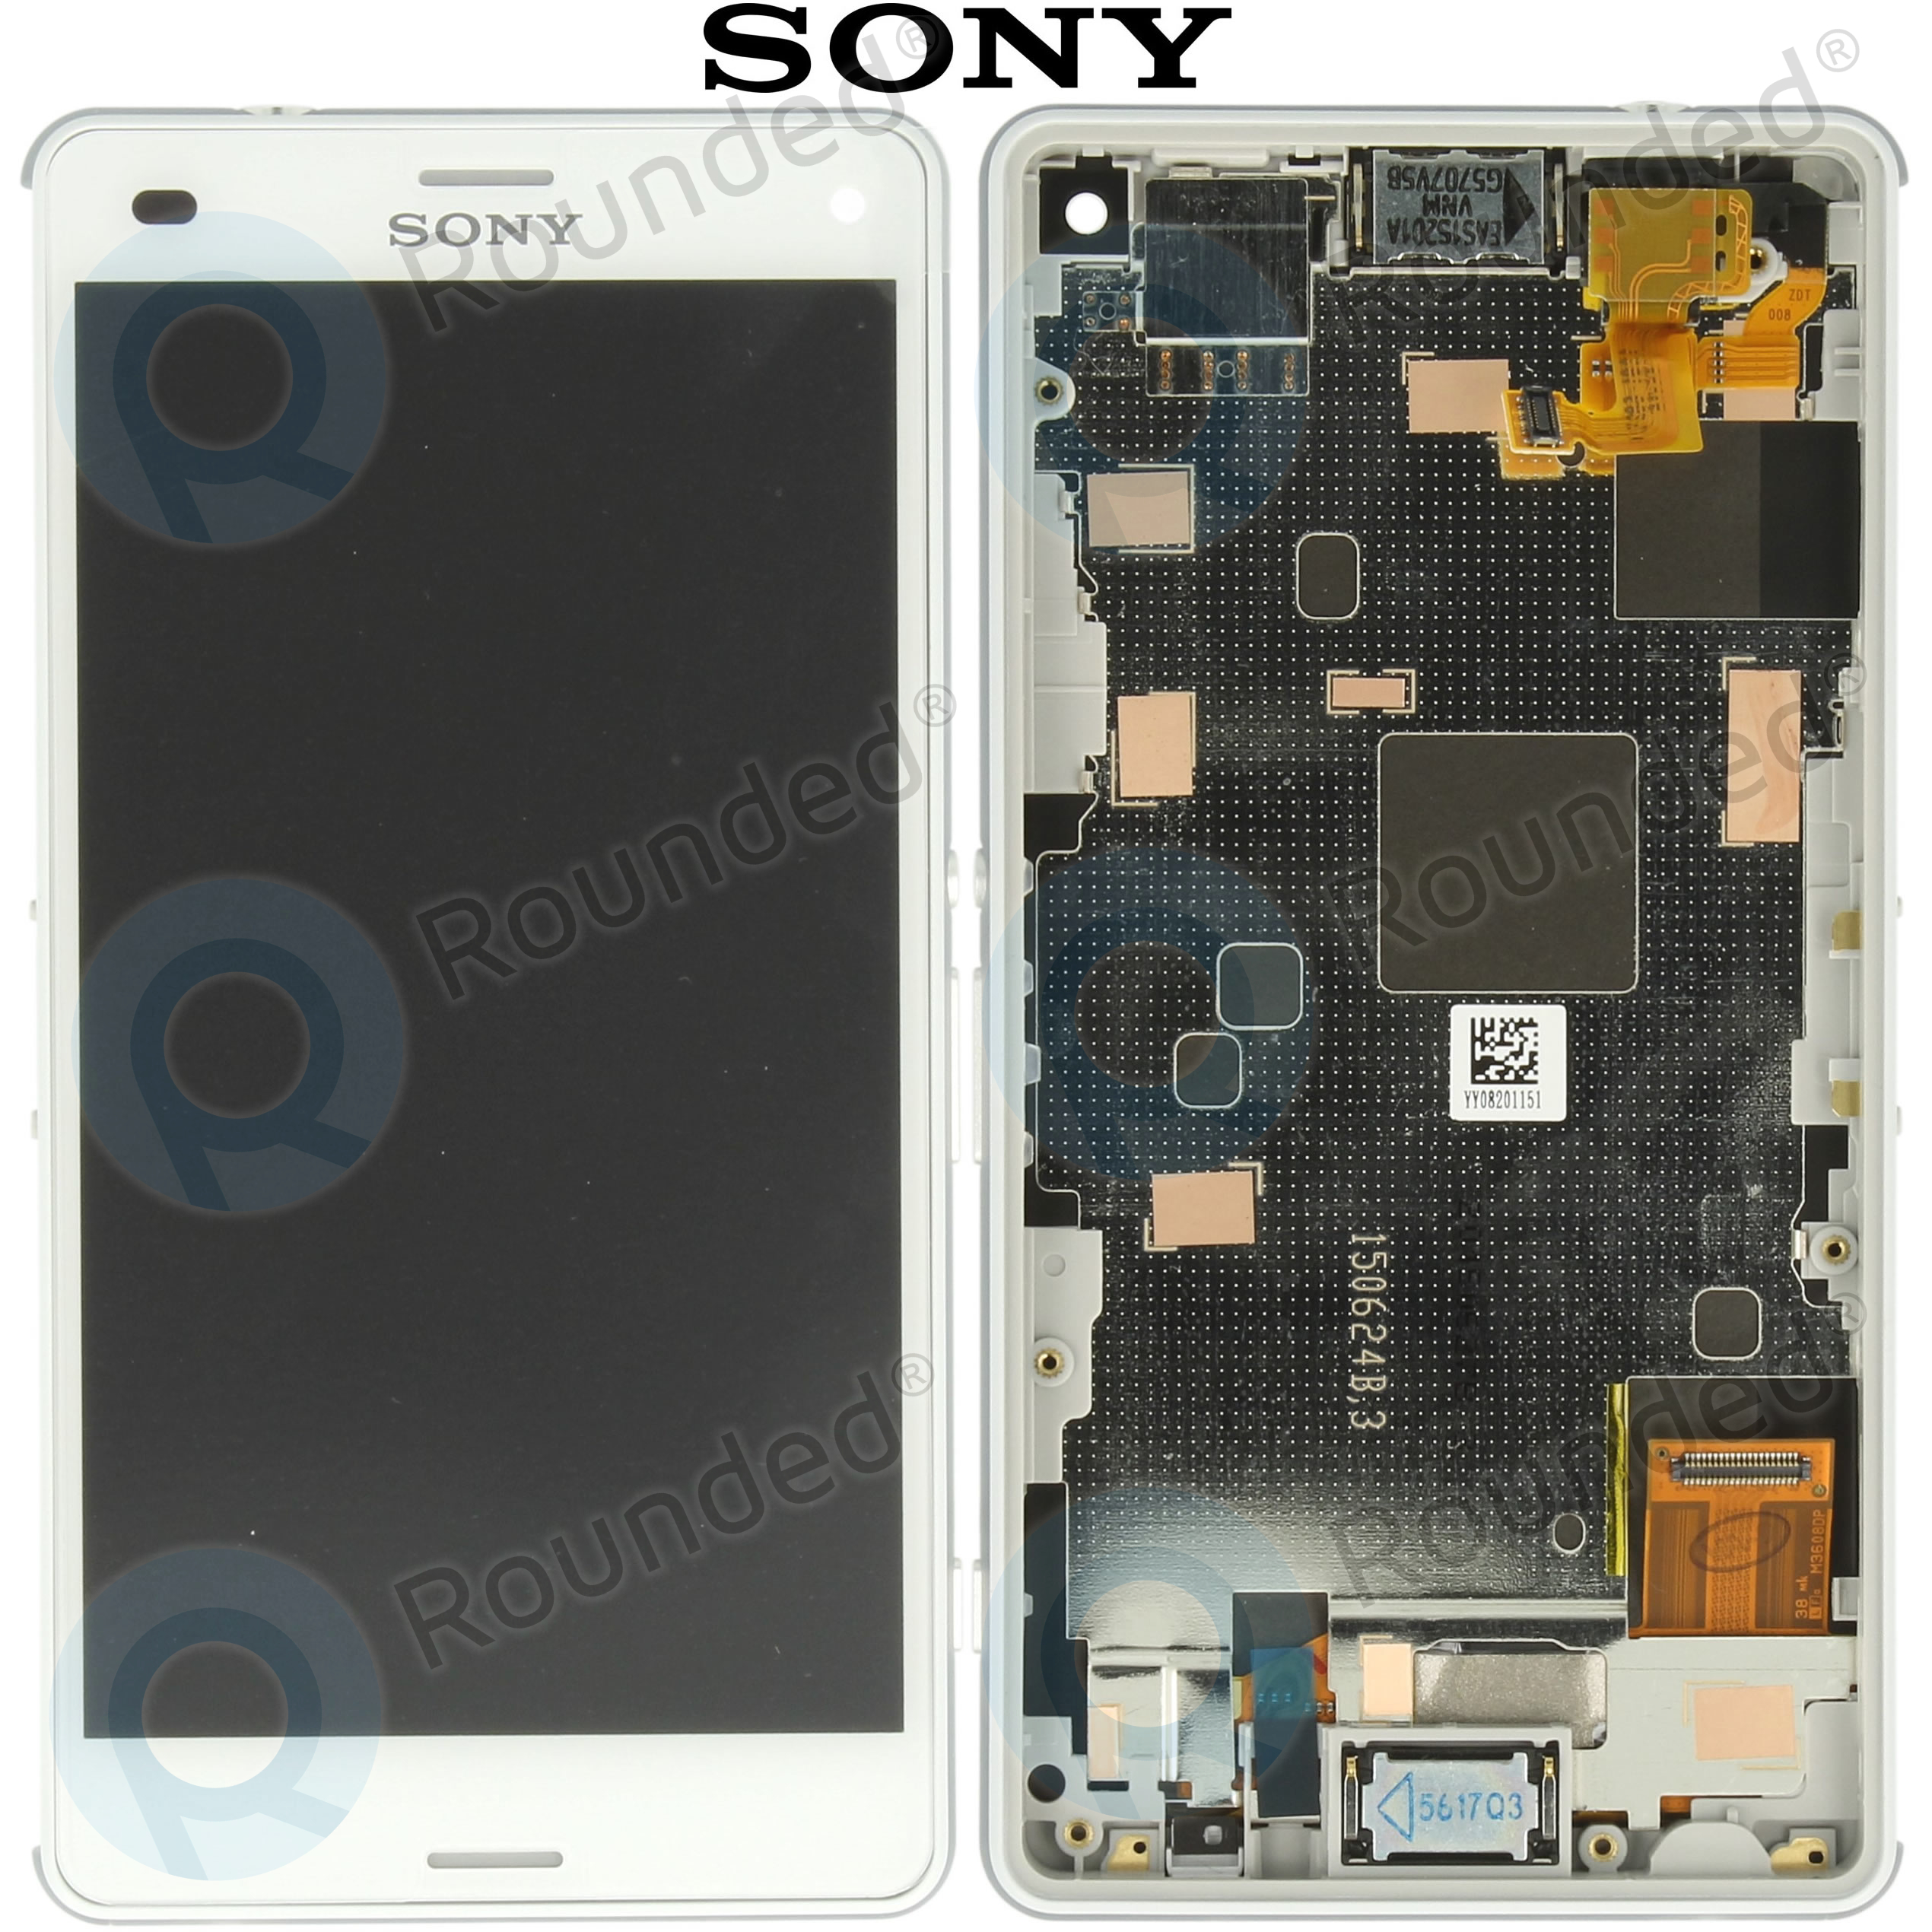 Bemiddelen een vuurtje stoken Legacy Sony Xperia Z3 Compact (D5803, D5833) Display unit complete white  U500139631289-2680